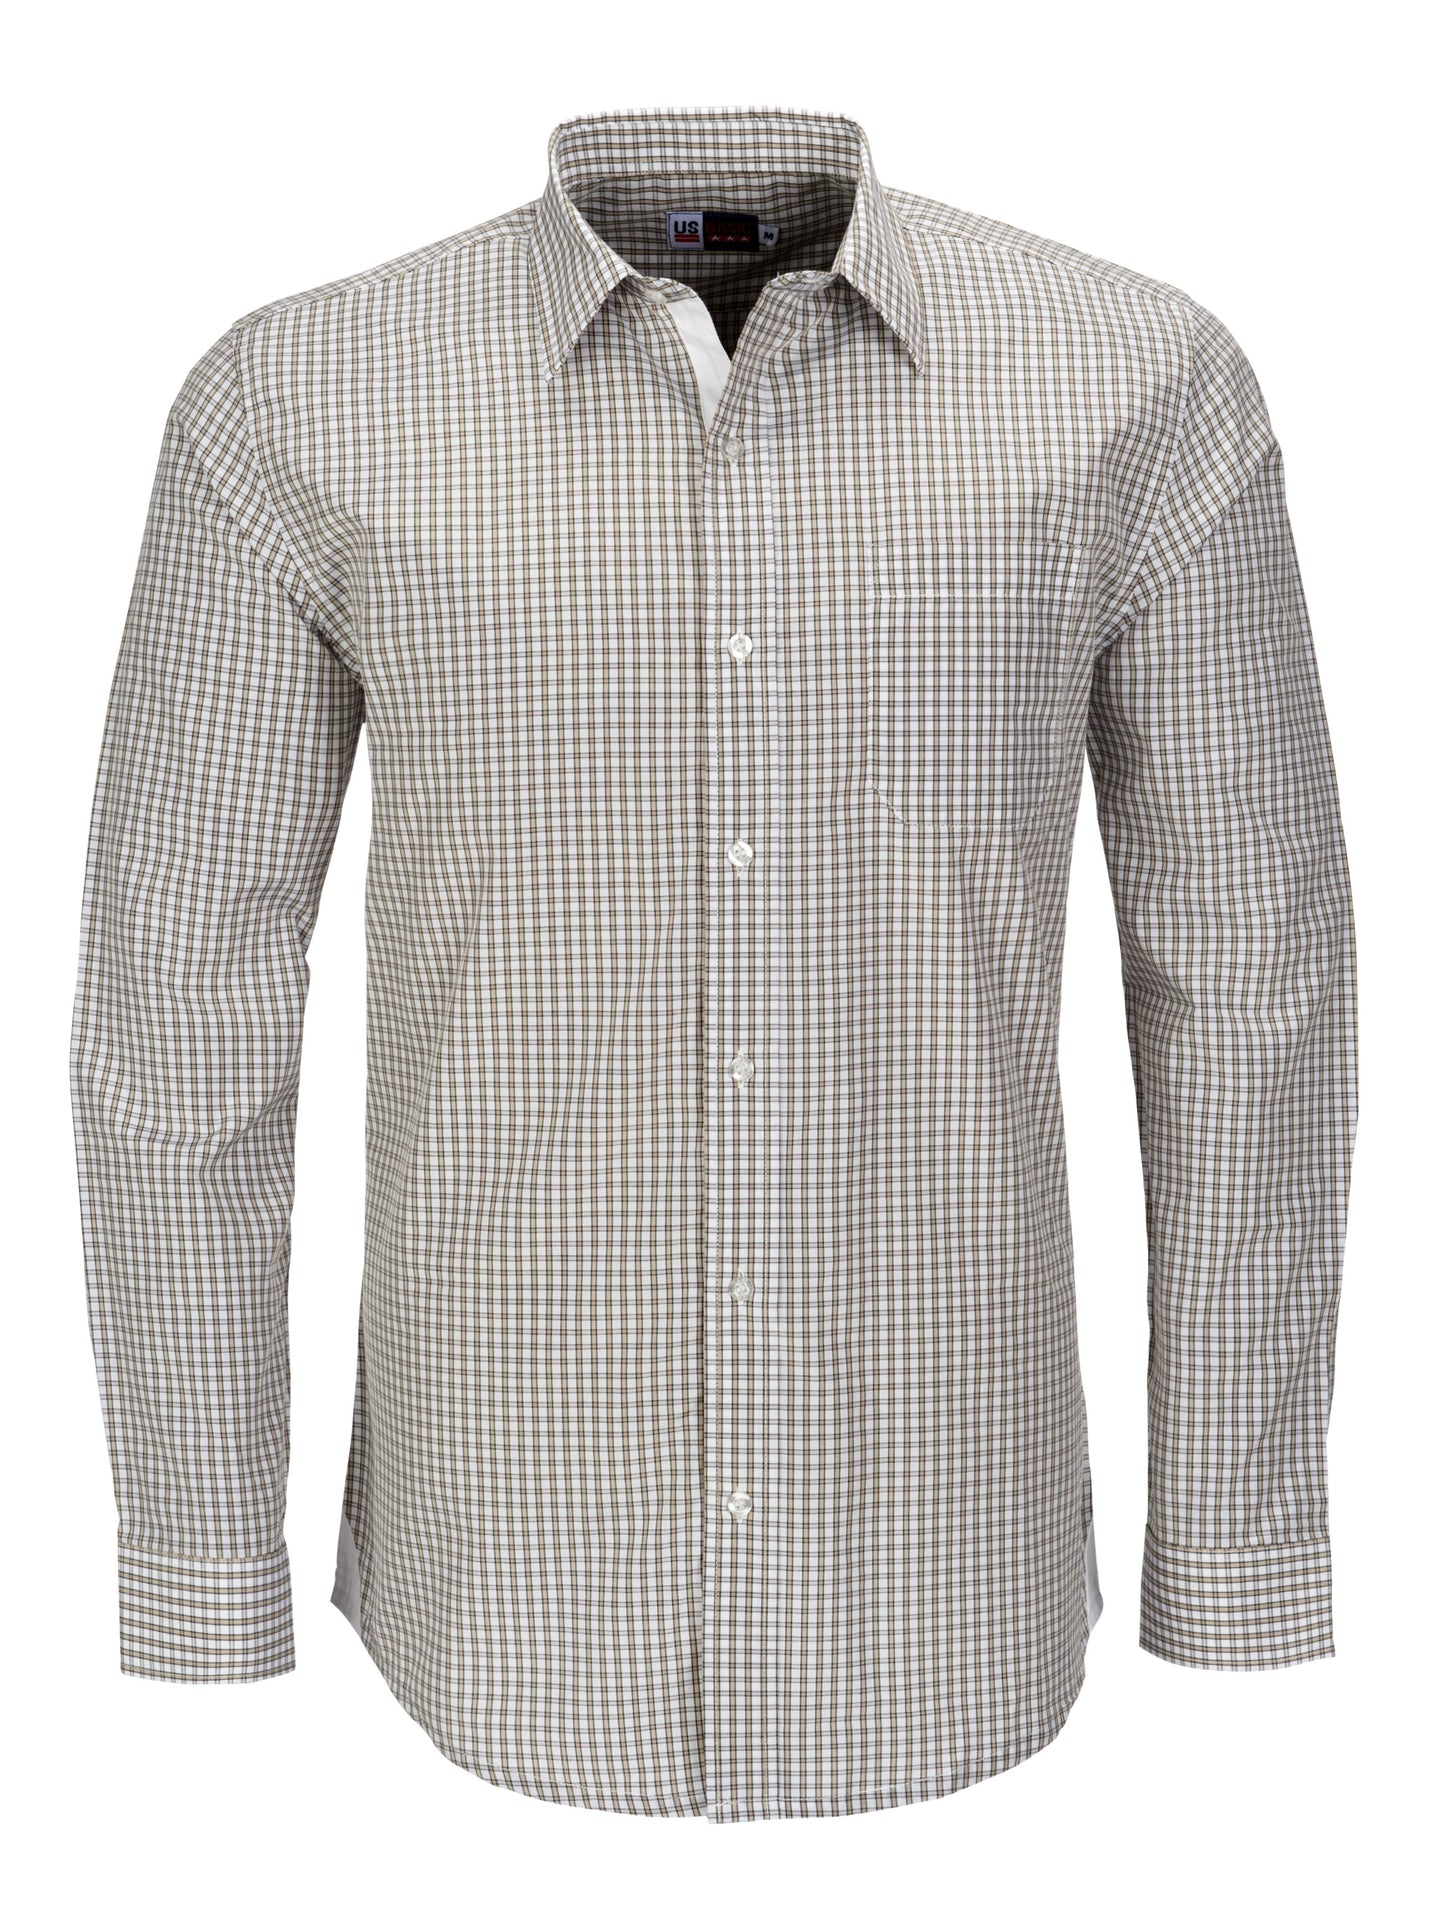 Mens Long Sleeve Kenton Shirt - Khaki Only